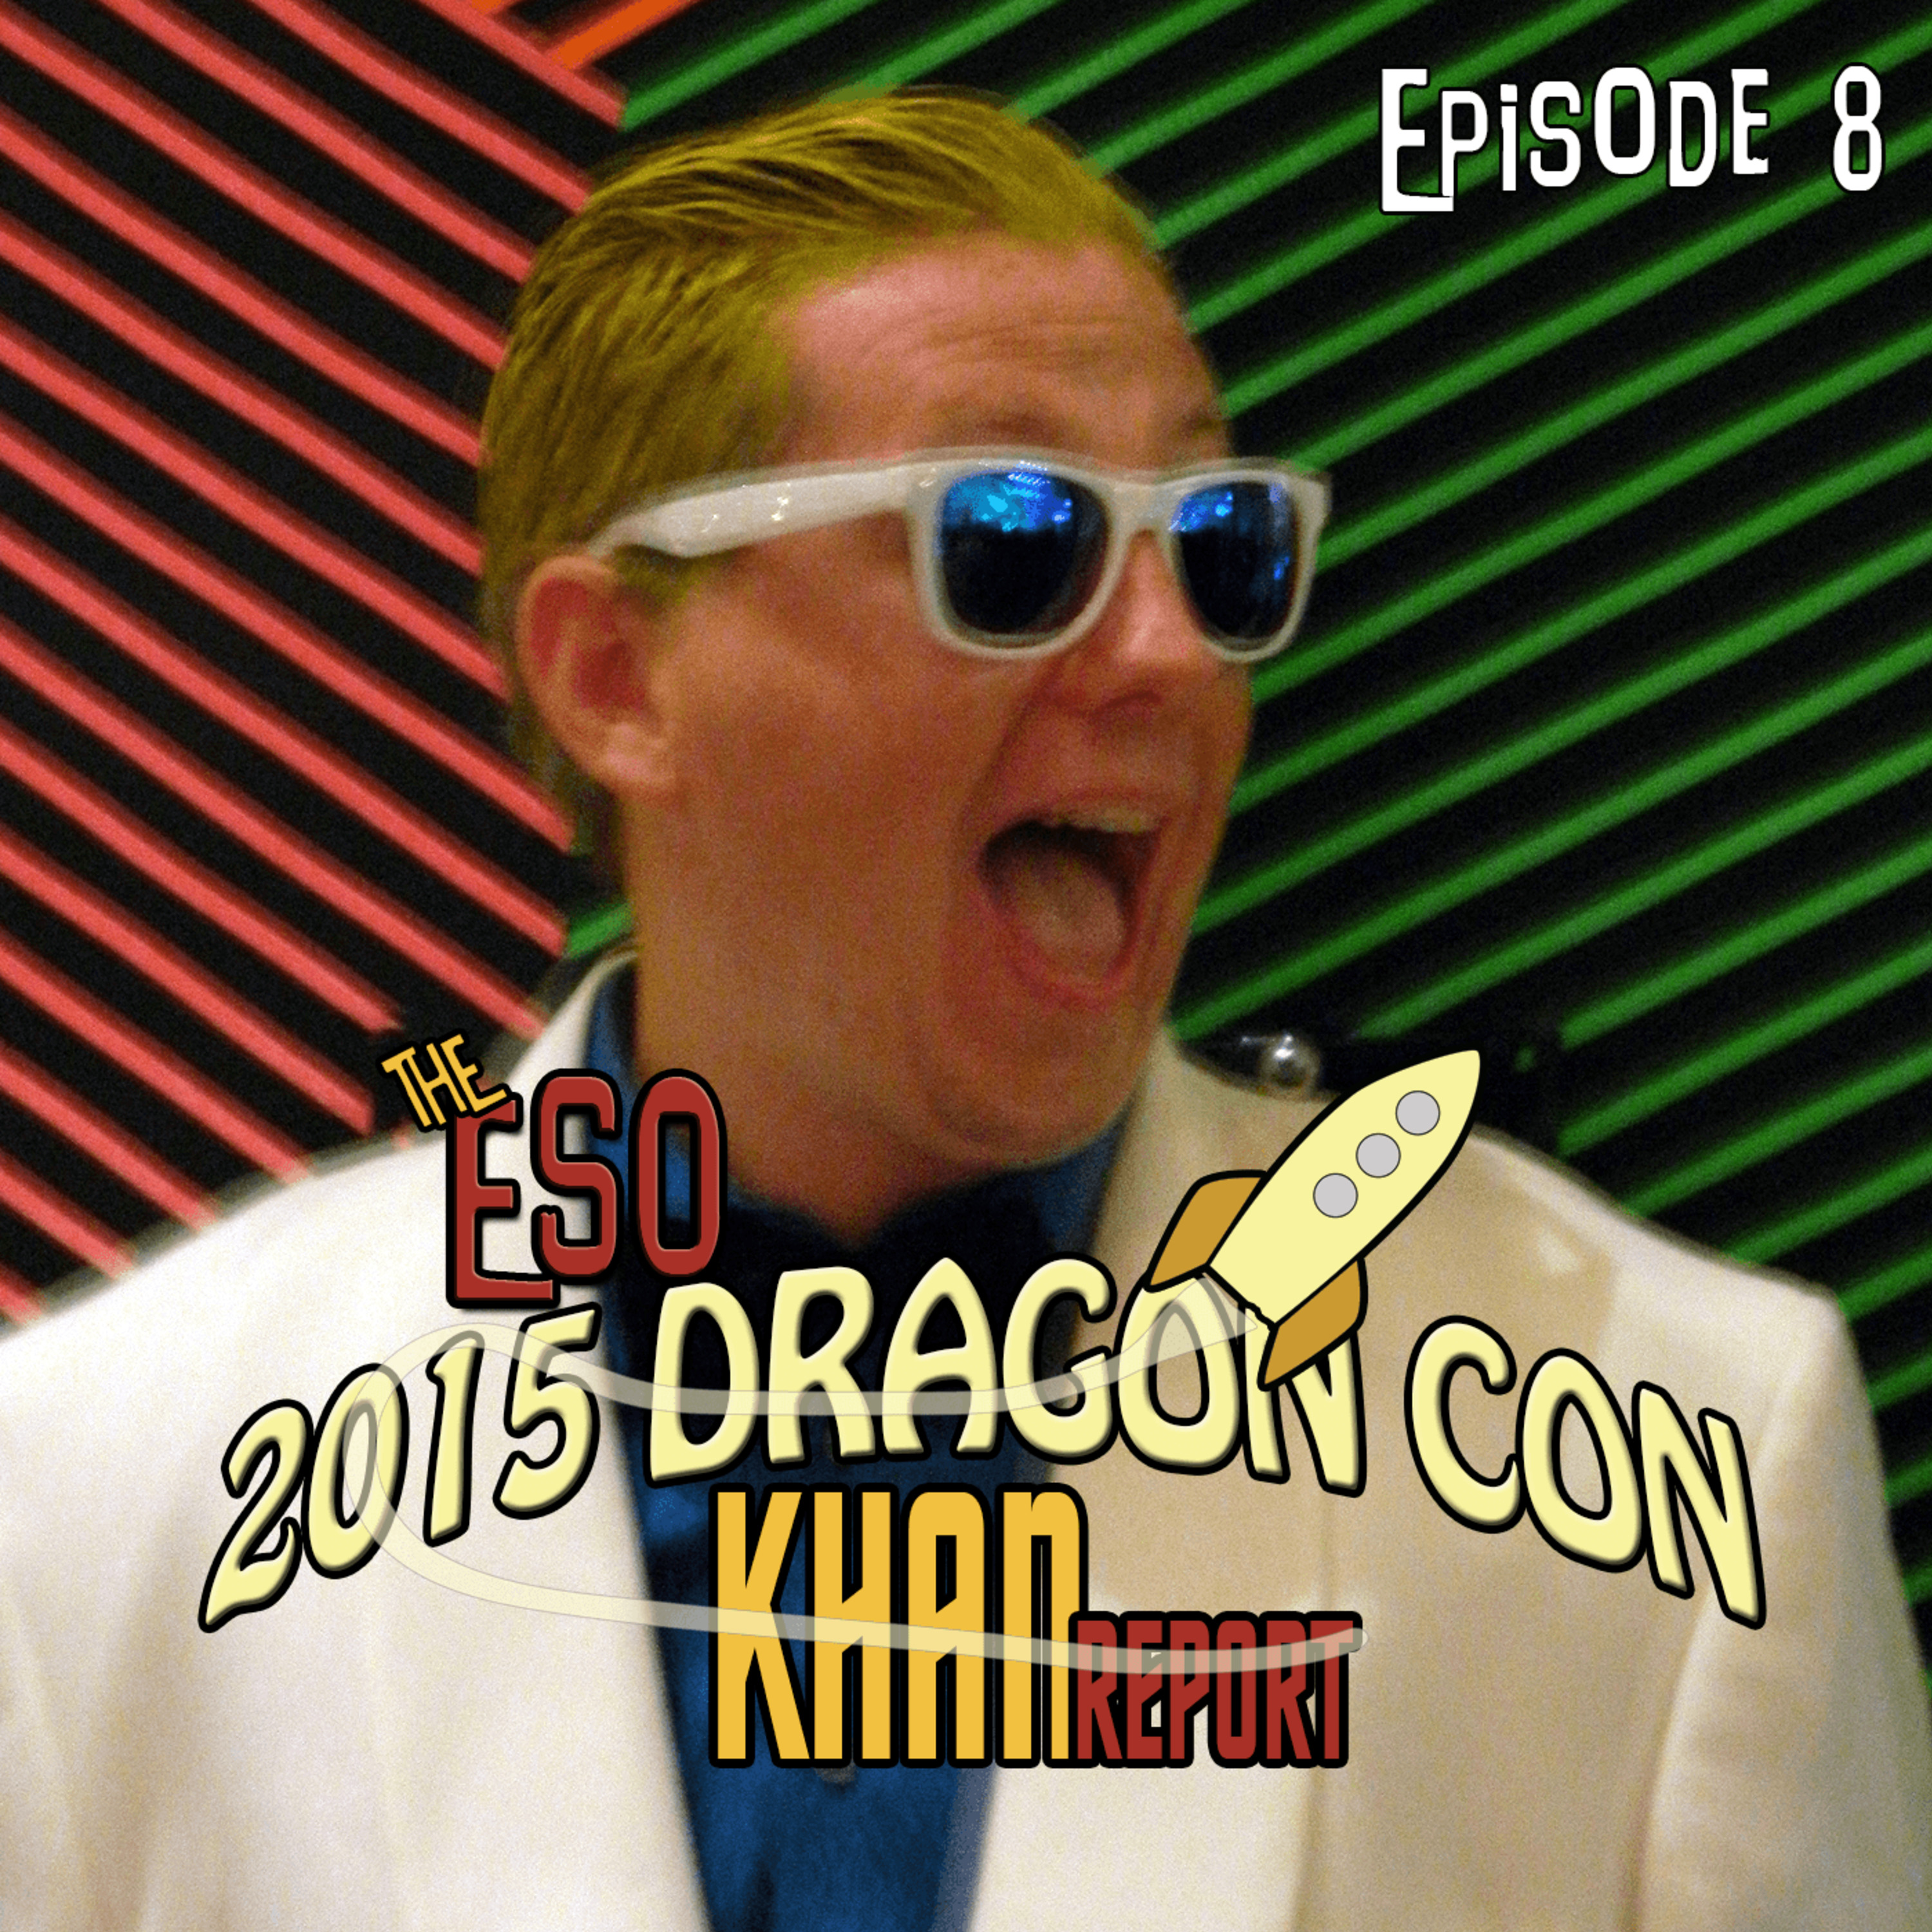 The ESO 2015 DragonCon Khan Report Episode 8